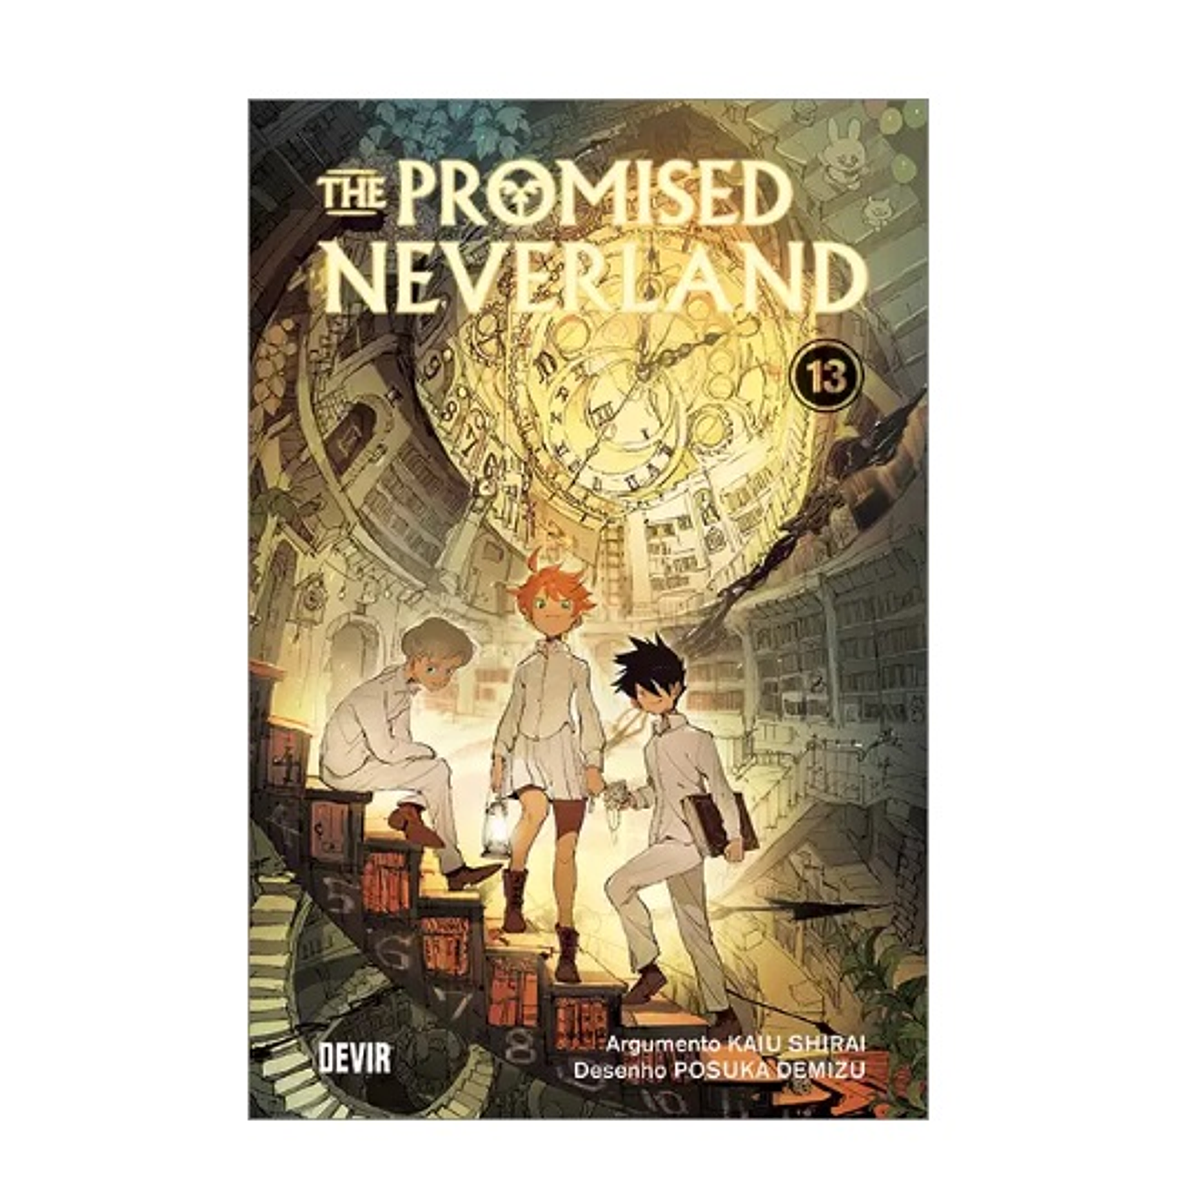 Devir: One Piece vol 2 The Promised Neverland vol. 16